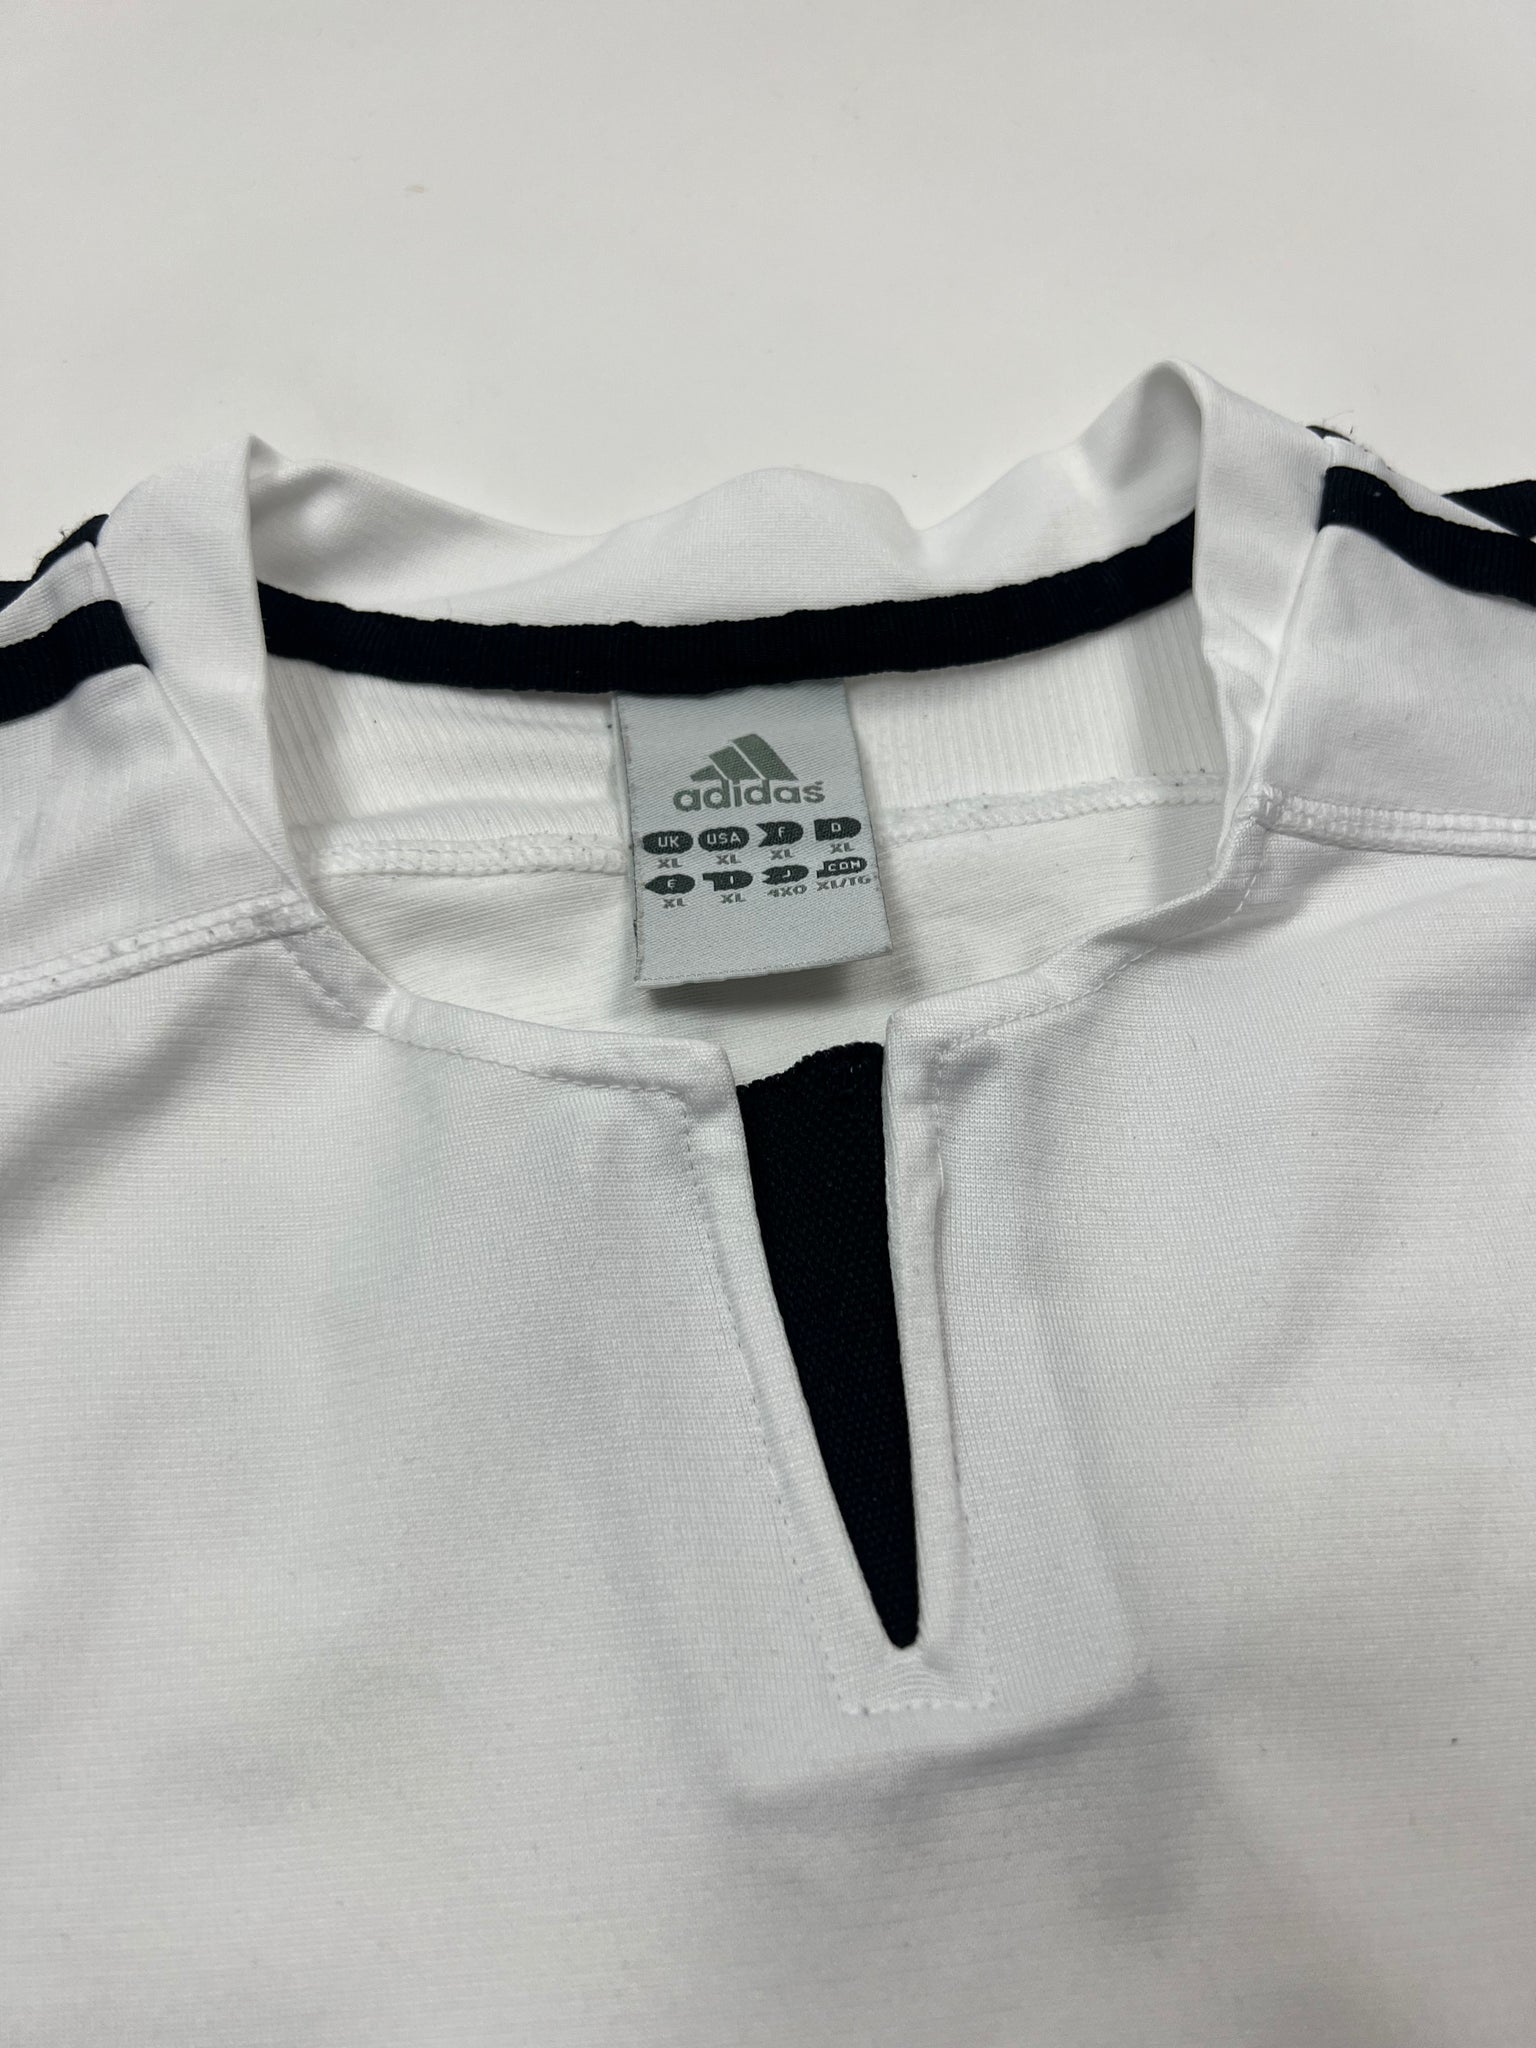 Adidas Real Madrid Jersey (XL)